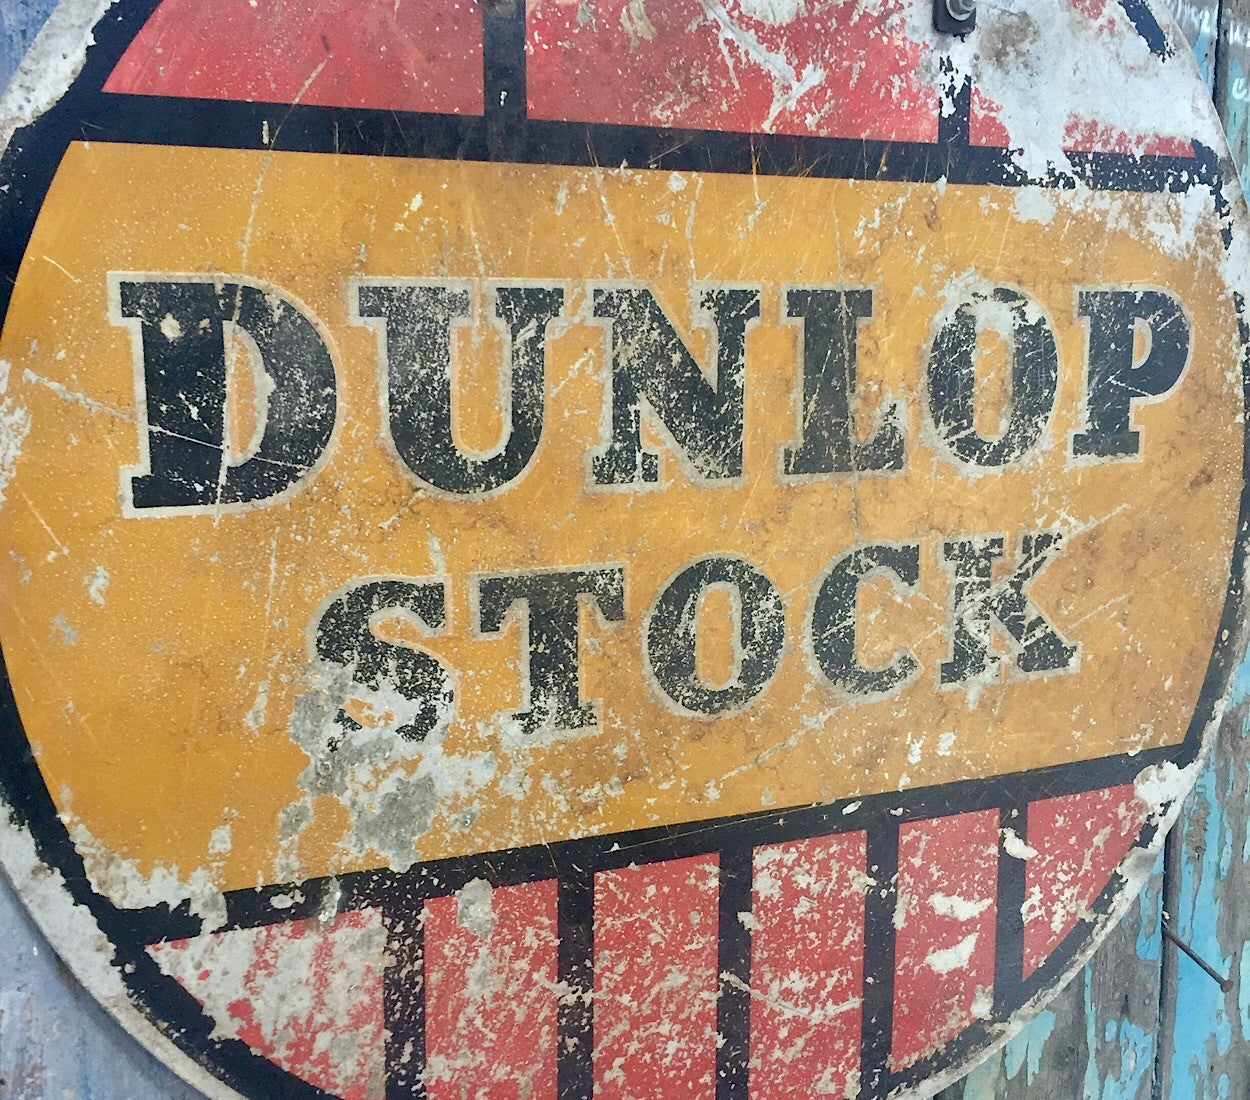 Vintage Dunlop stock round 1930s advertising sign